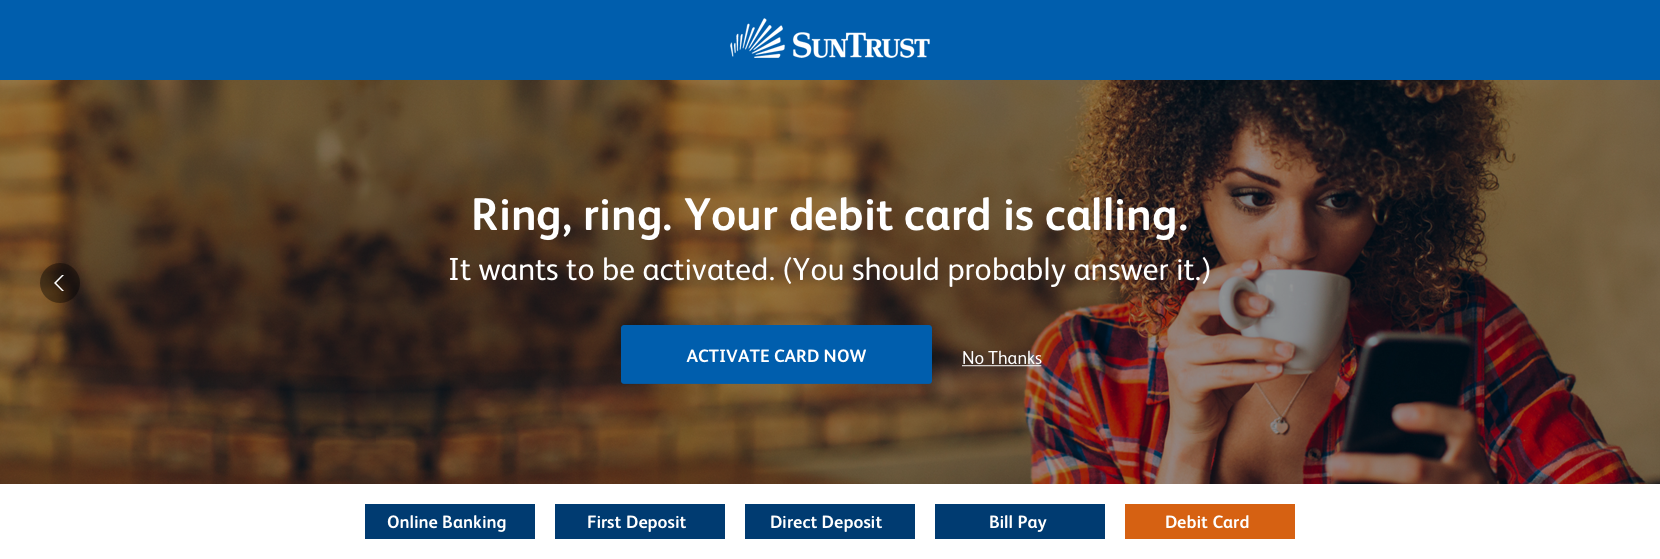 Activate Debit Card.png